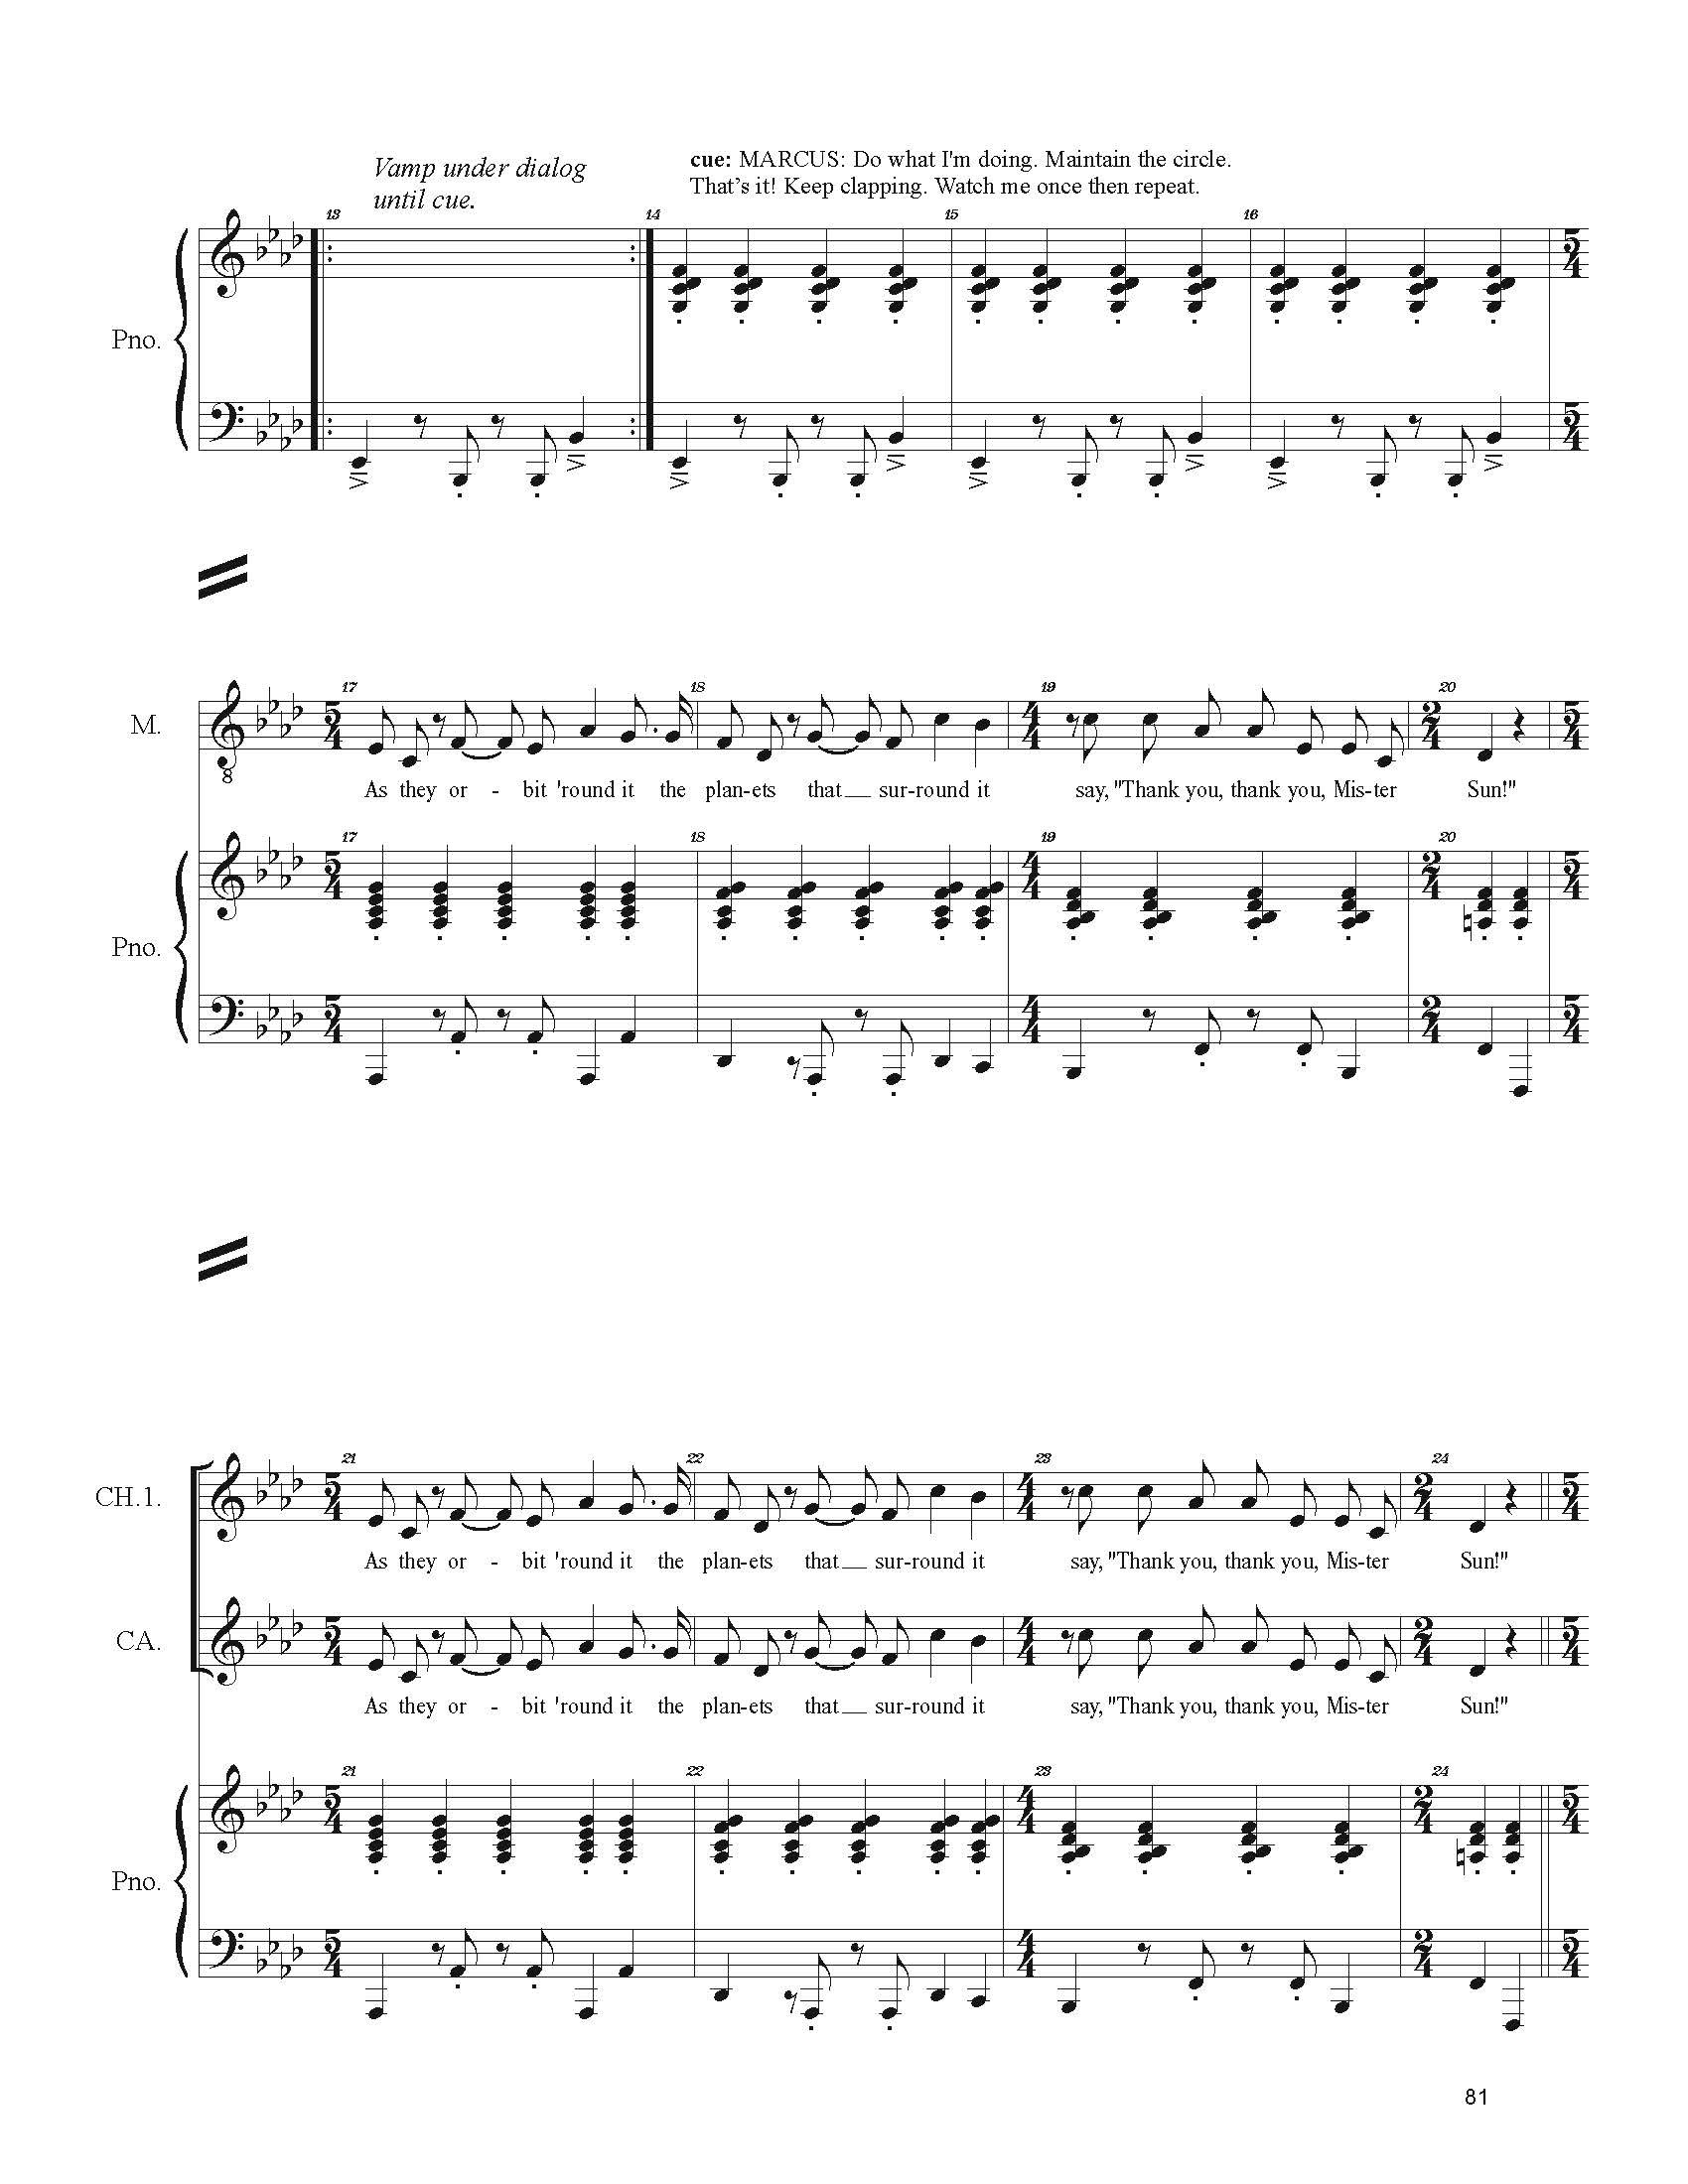 FULL PIANO VOCAL SCORE DRAFT 1 - Score_Page_081.jpg